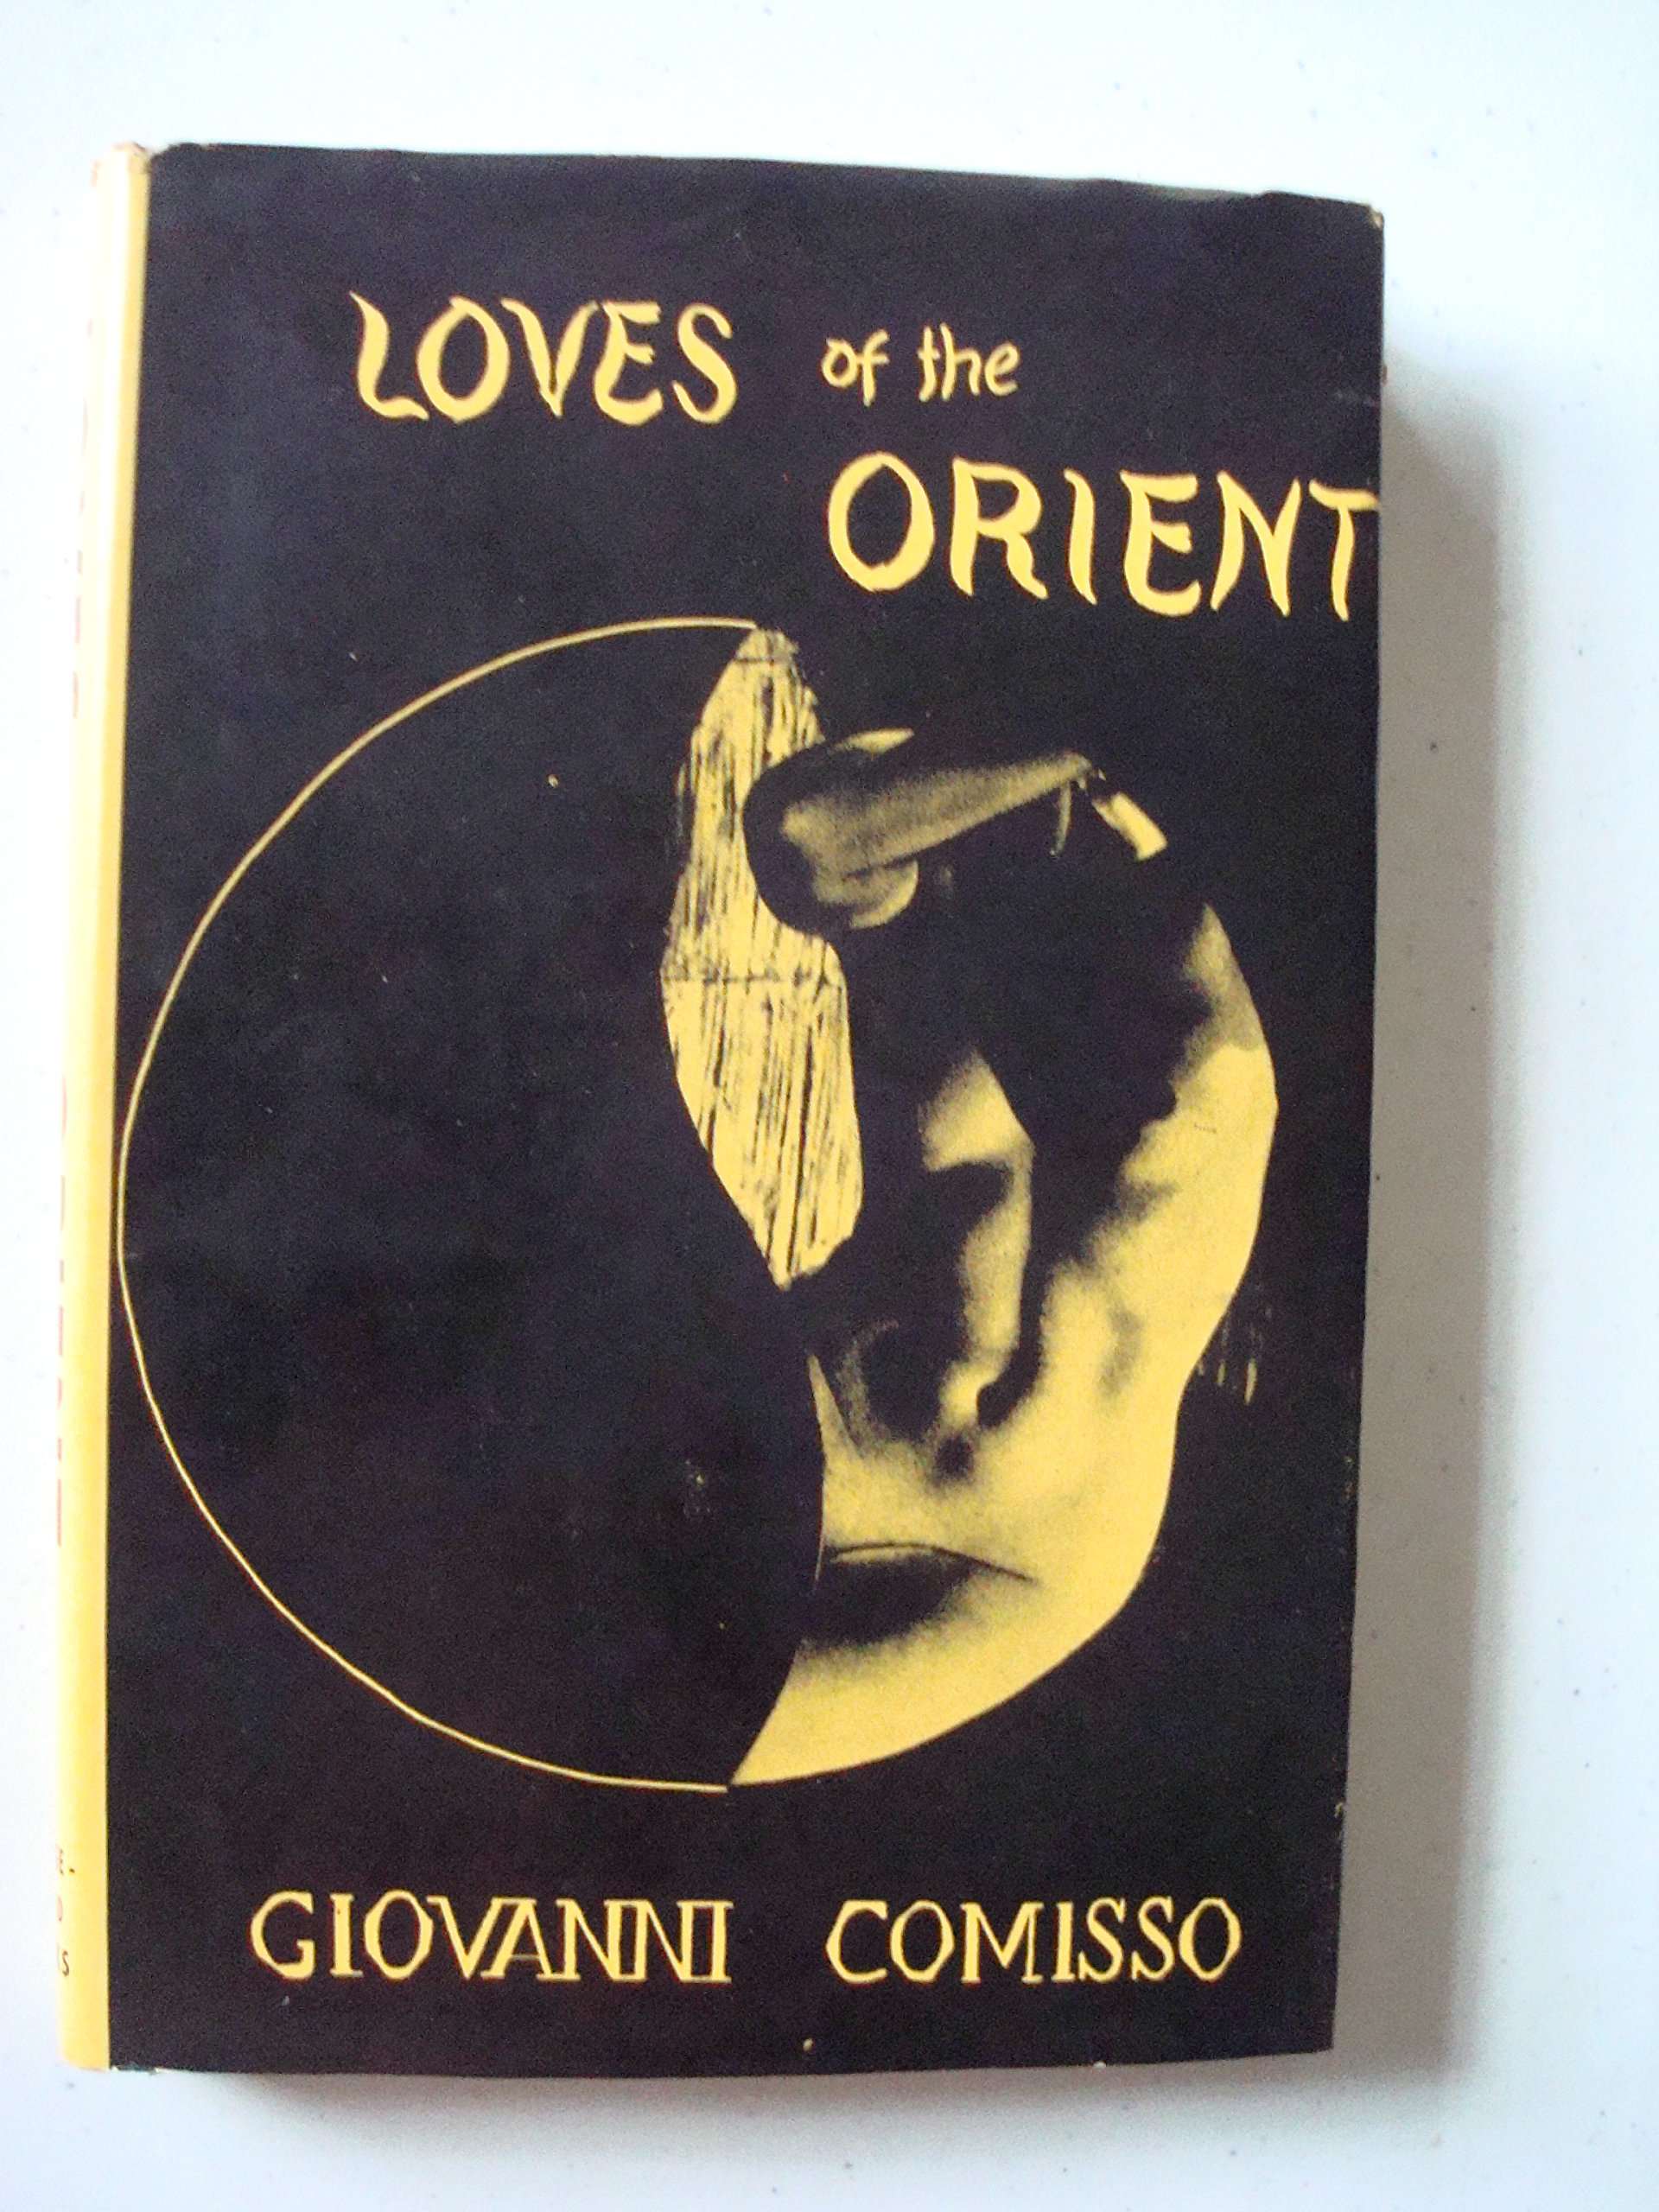 Giovanni Comisso - Loves of the Orient (Bridgehead Books, 1954)